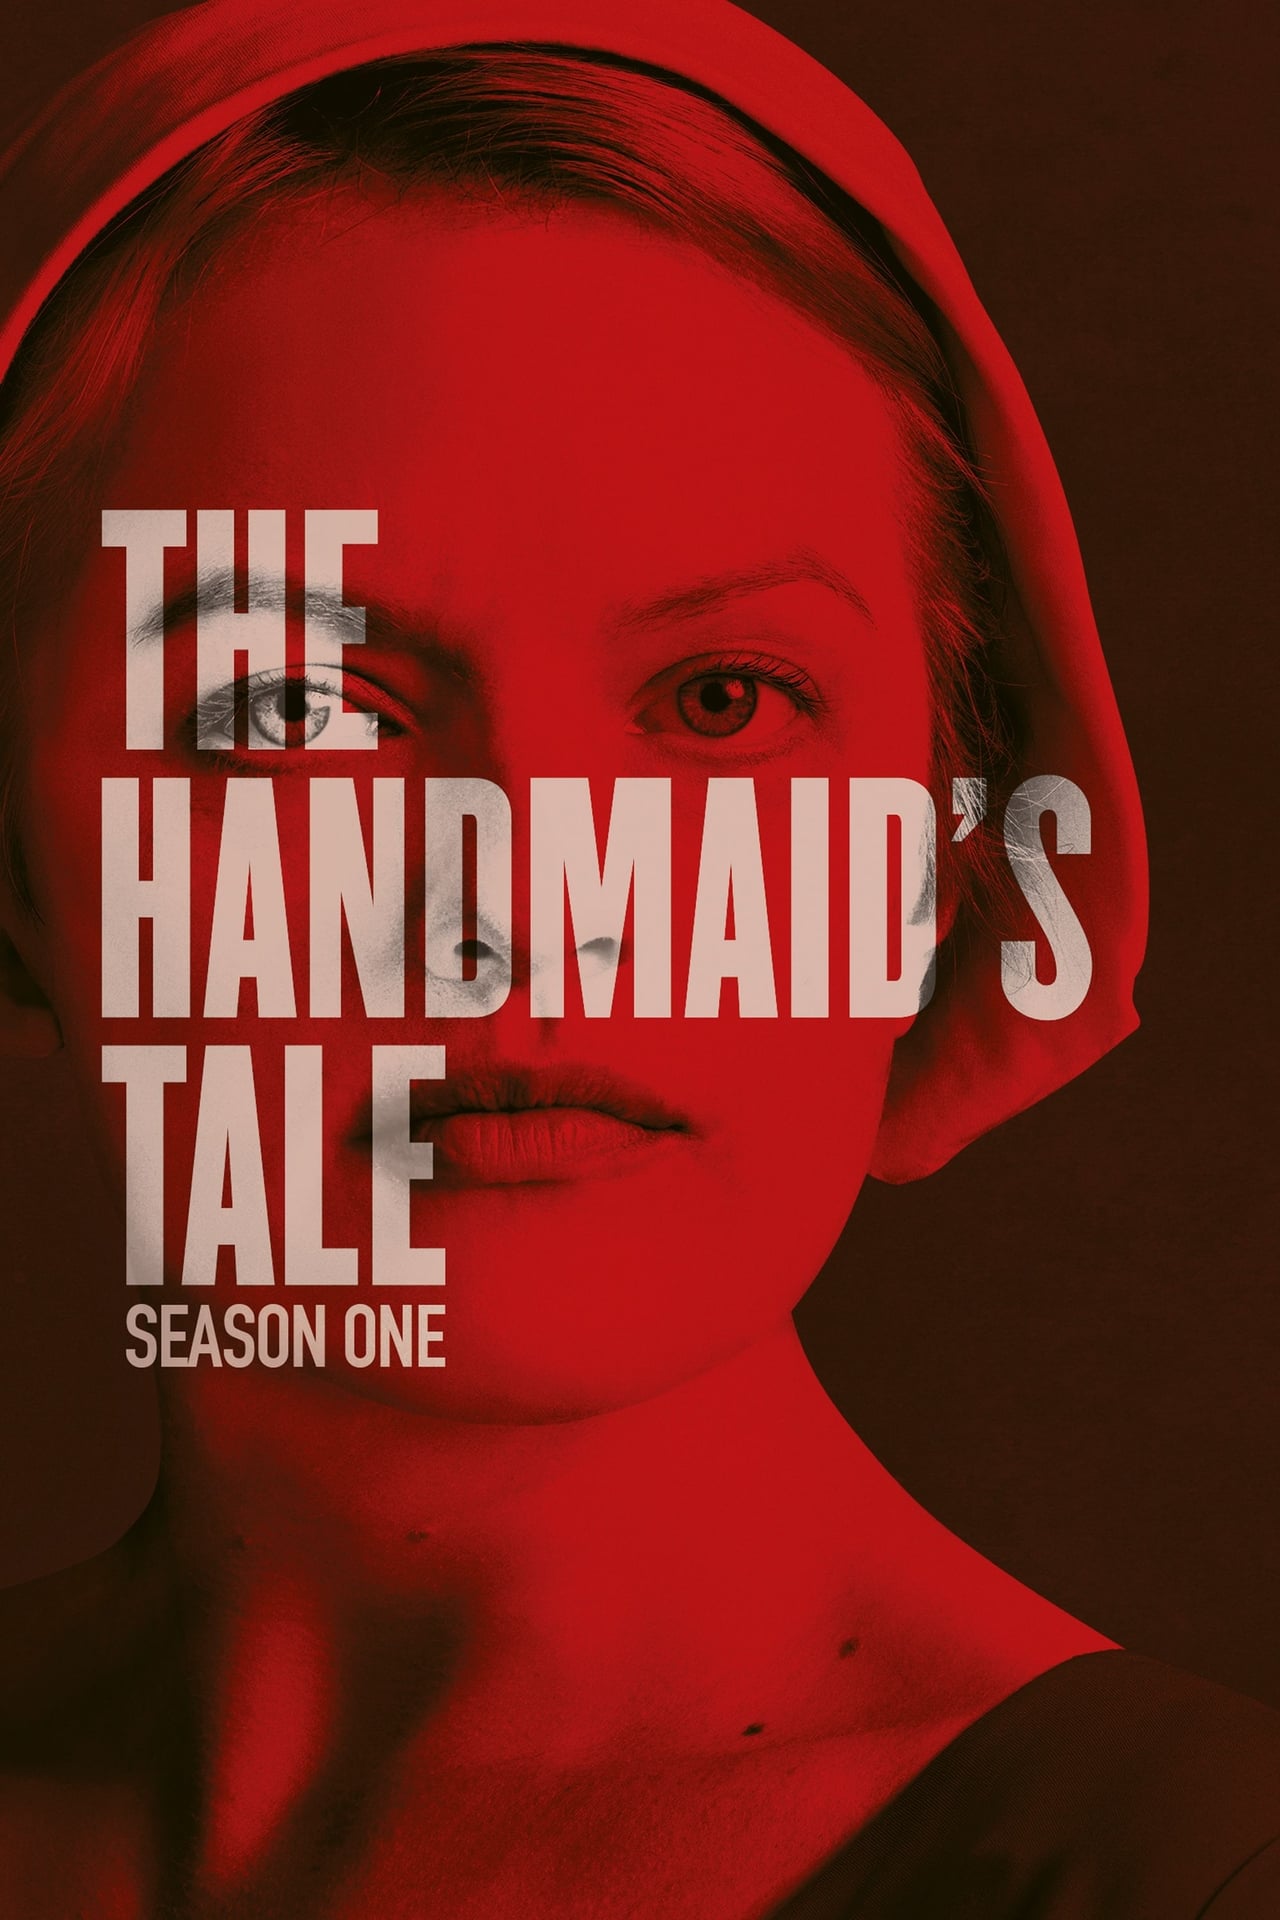 The Handmaid's Tale (2017)